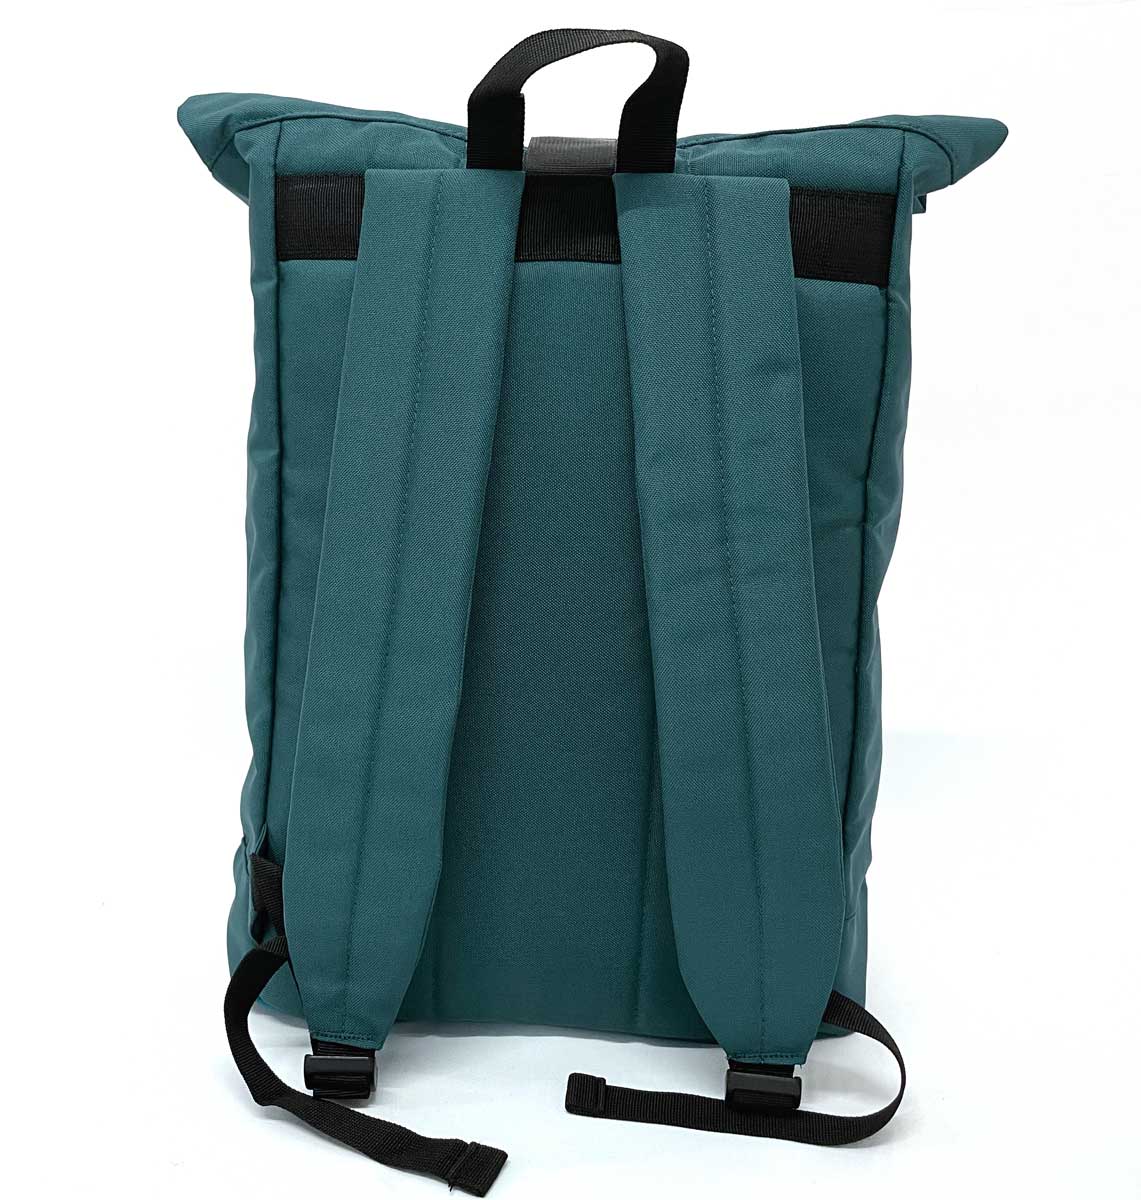 Bulldog Beach Roll-top Recycled Backpack - Blue Panda